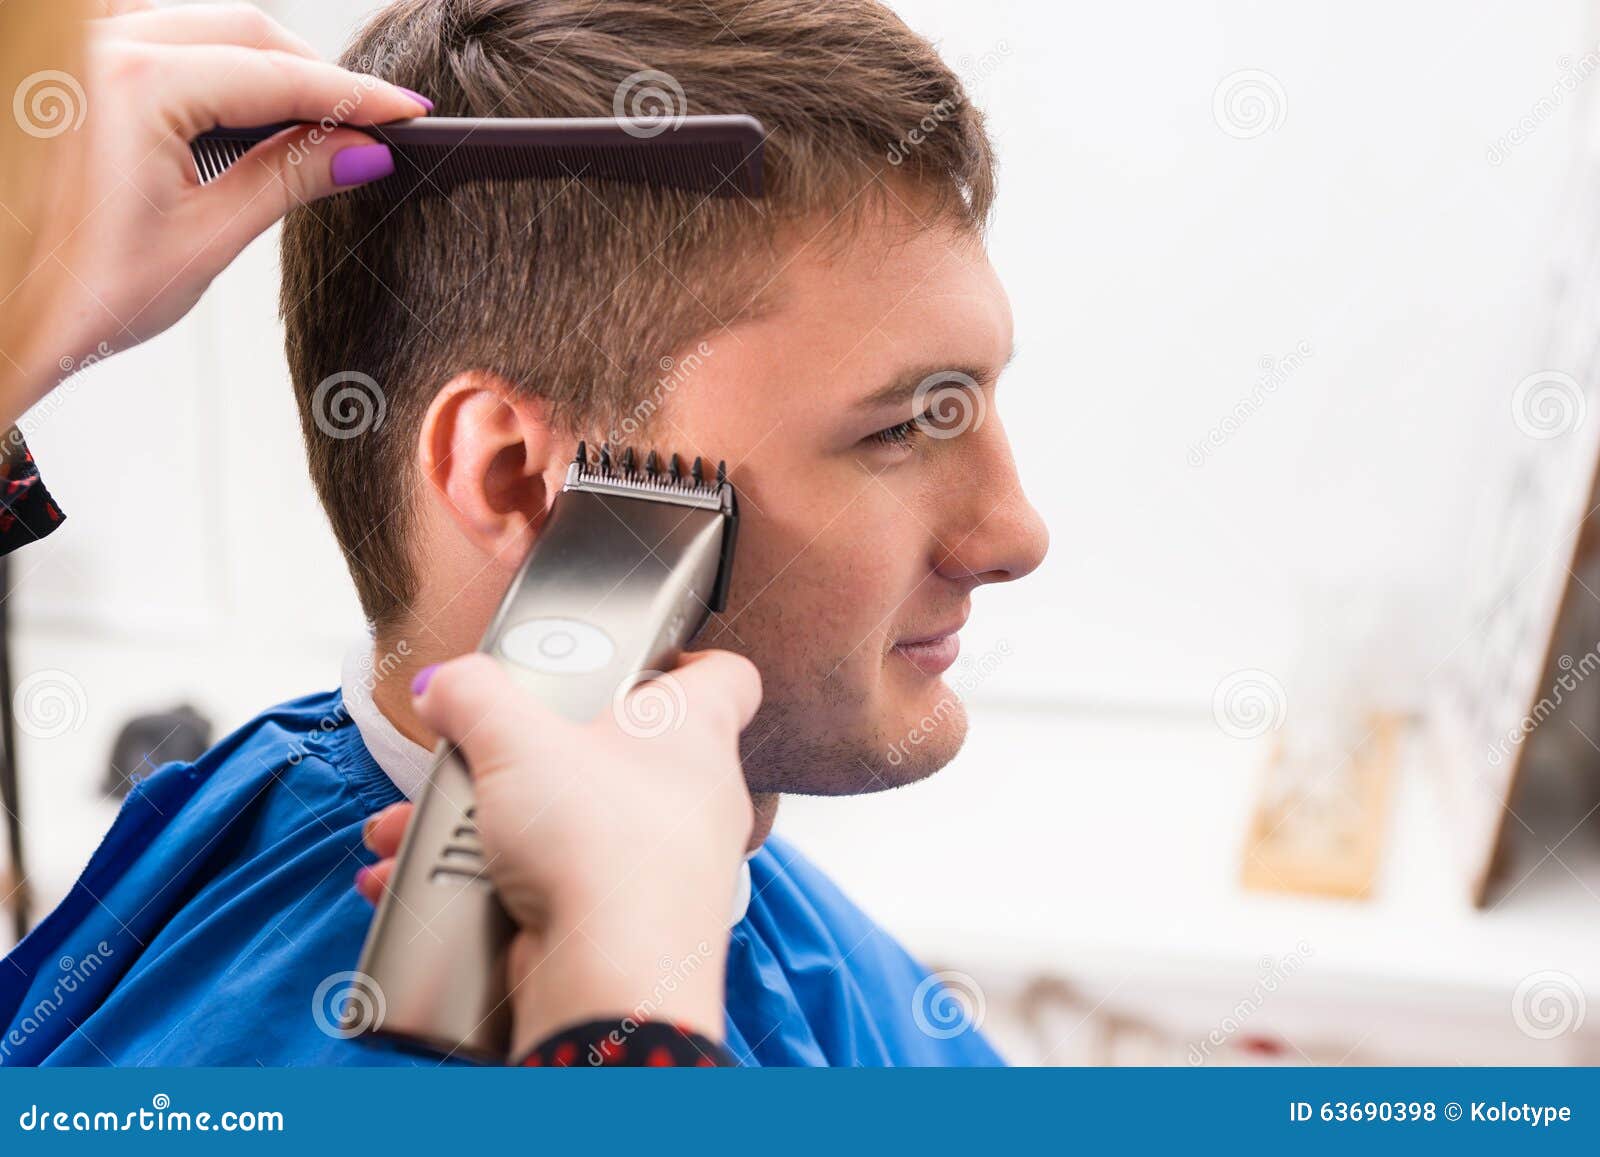 man having hair cut by stylist in salon